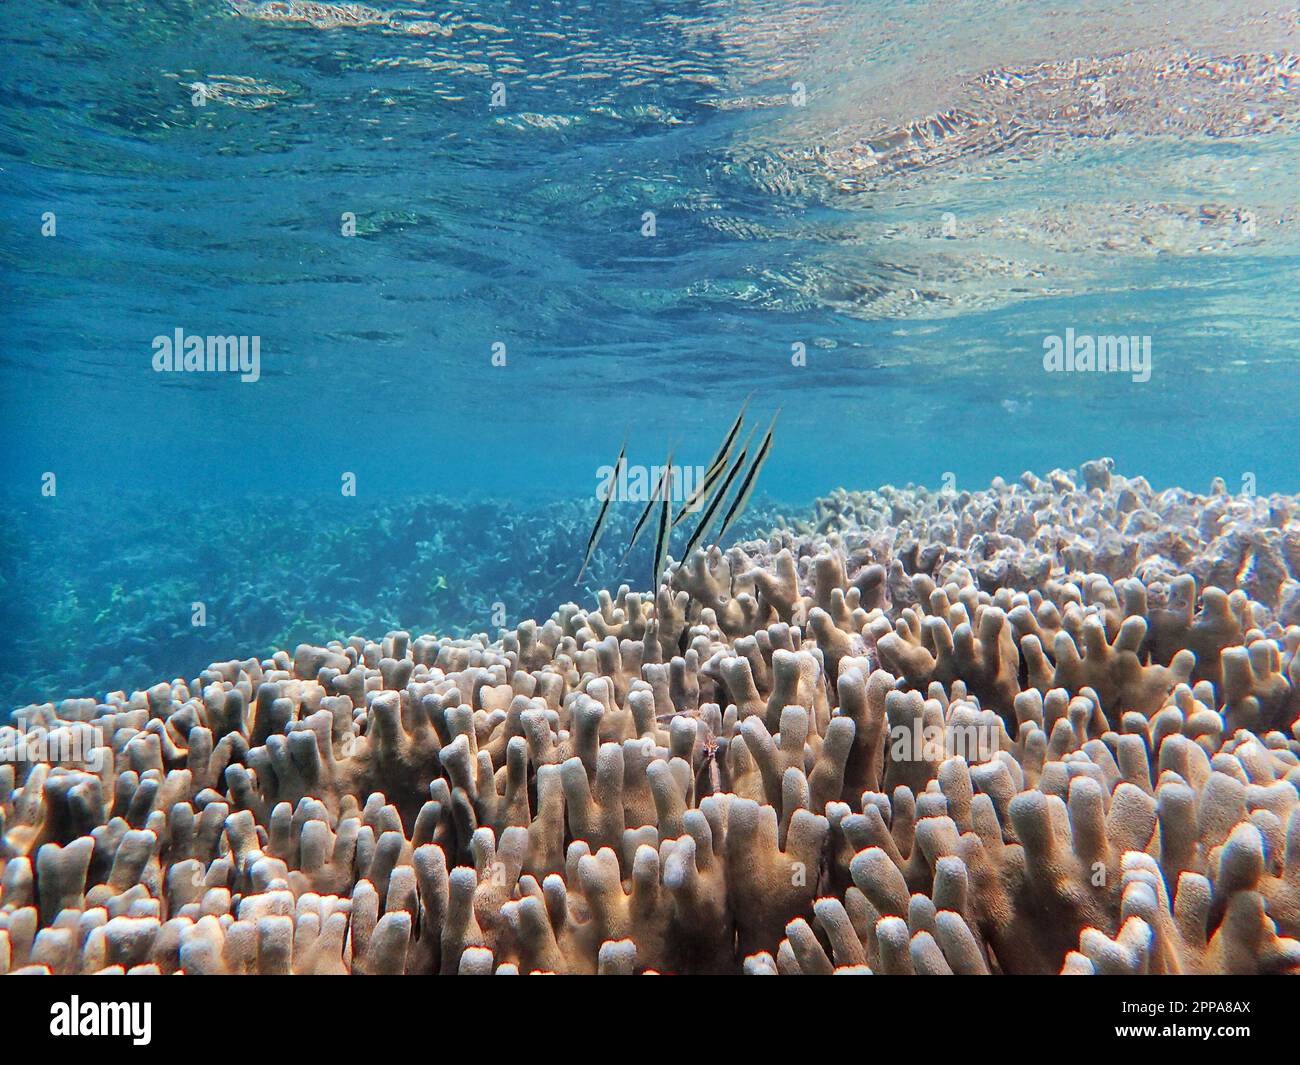 Indonesien Anambas Inseln - Garnelen - Aeoliscus strigatus - Azorfische Stockfoto